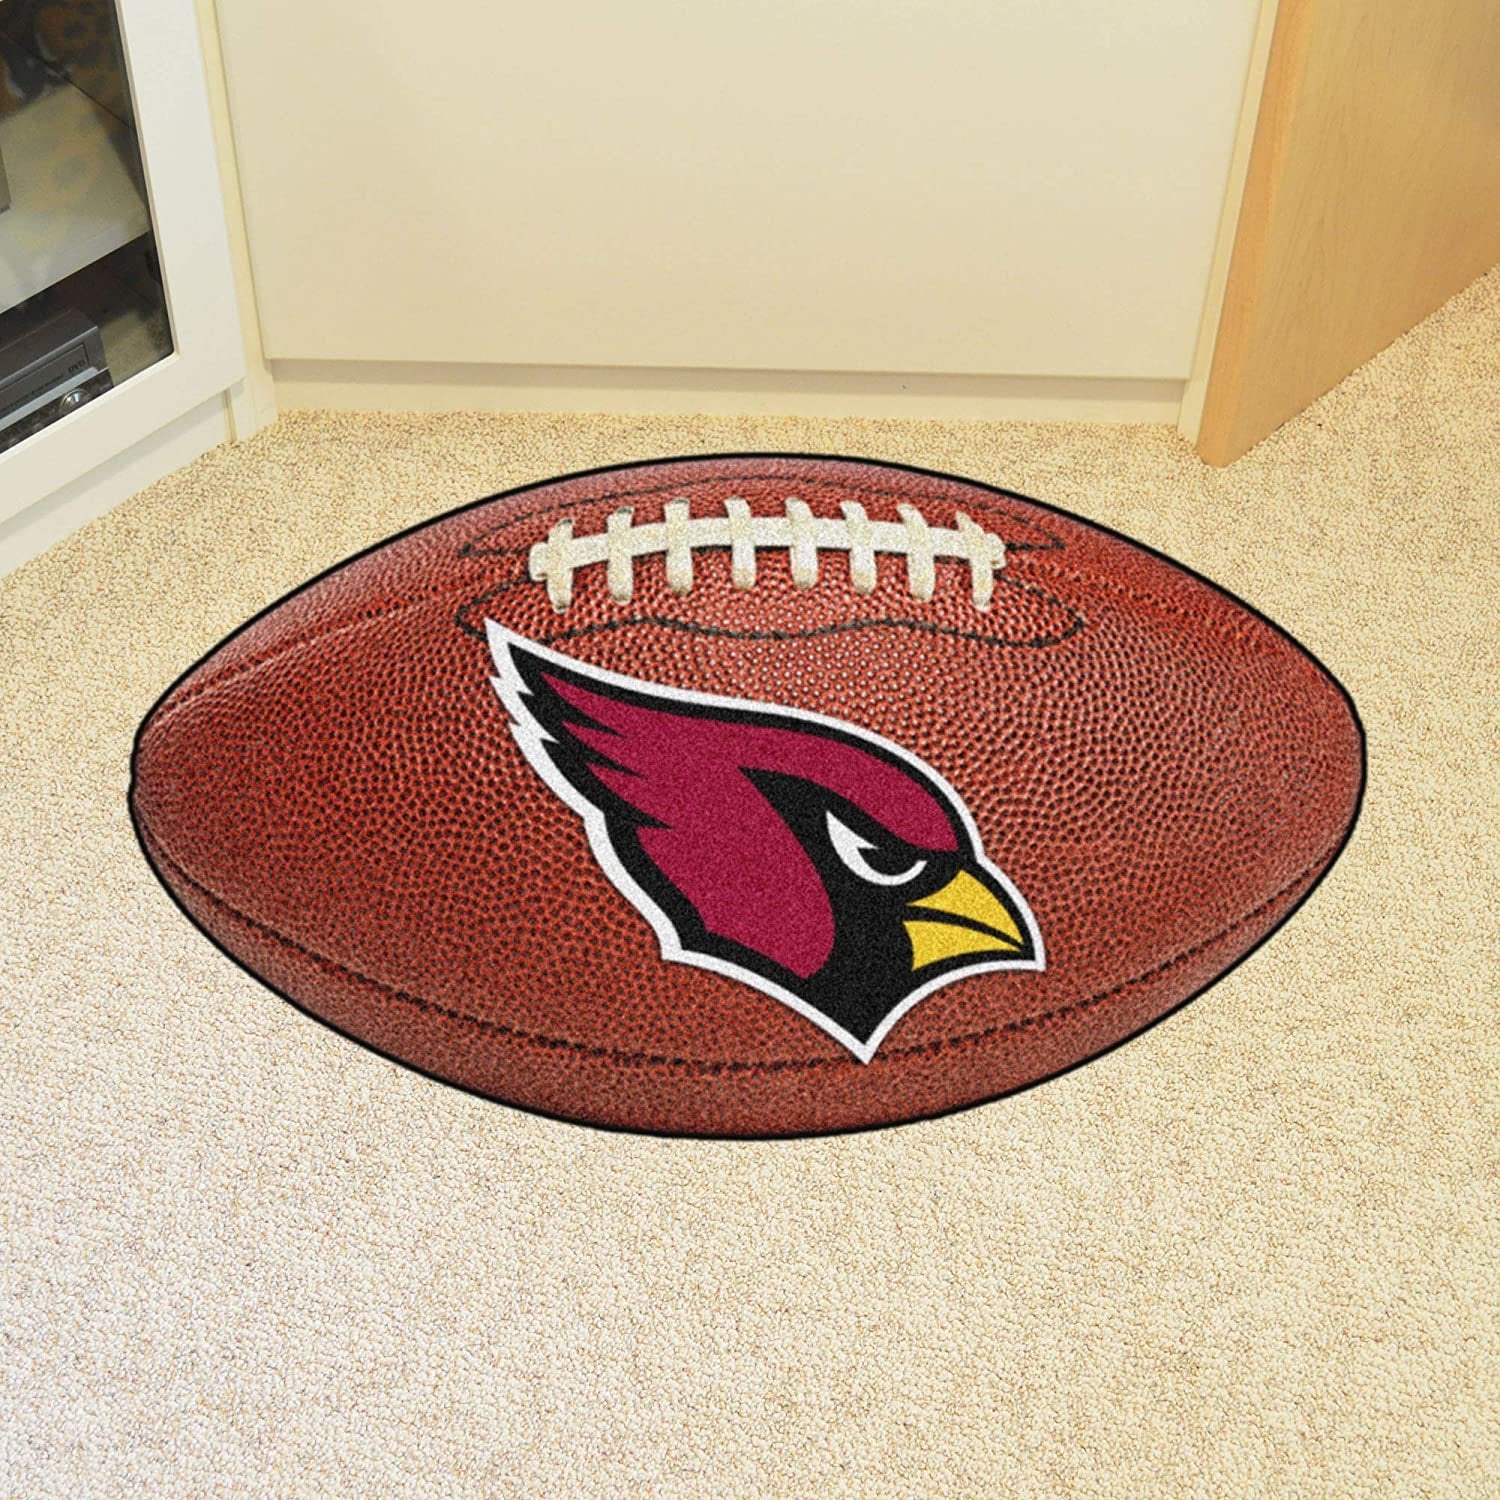 Arizona Cardinals Floor Mat Area Rug, 20x32 Inch, Non-Skid Backing, Football Design